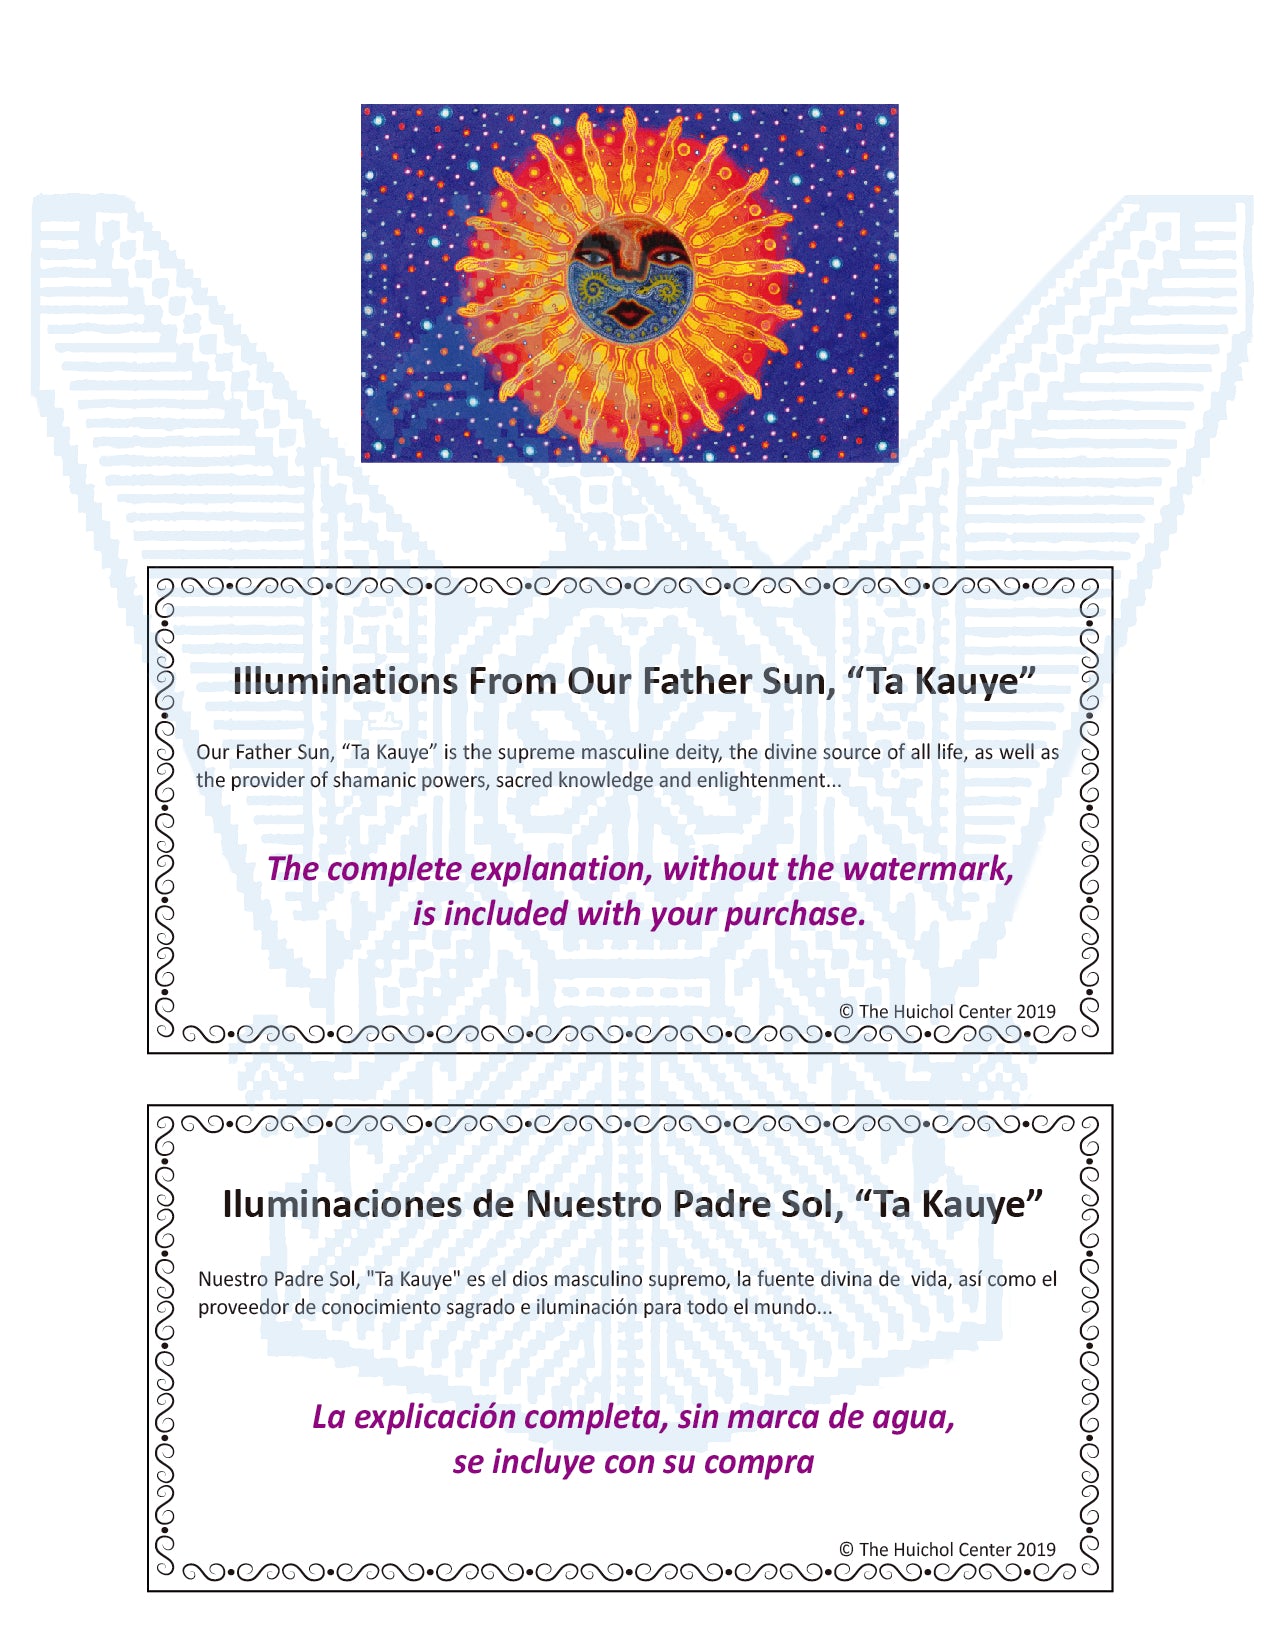 Illuminations From Our Father Sun, "Ta Kauye"